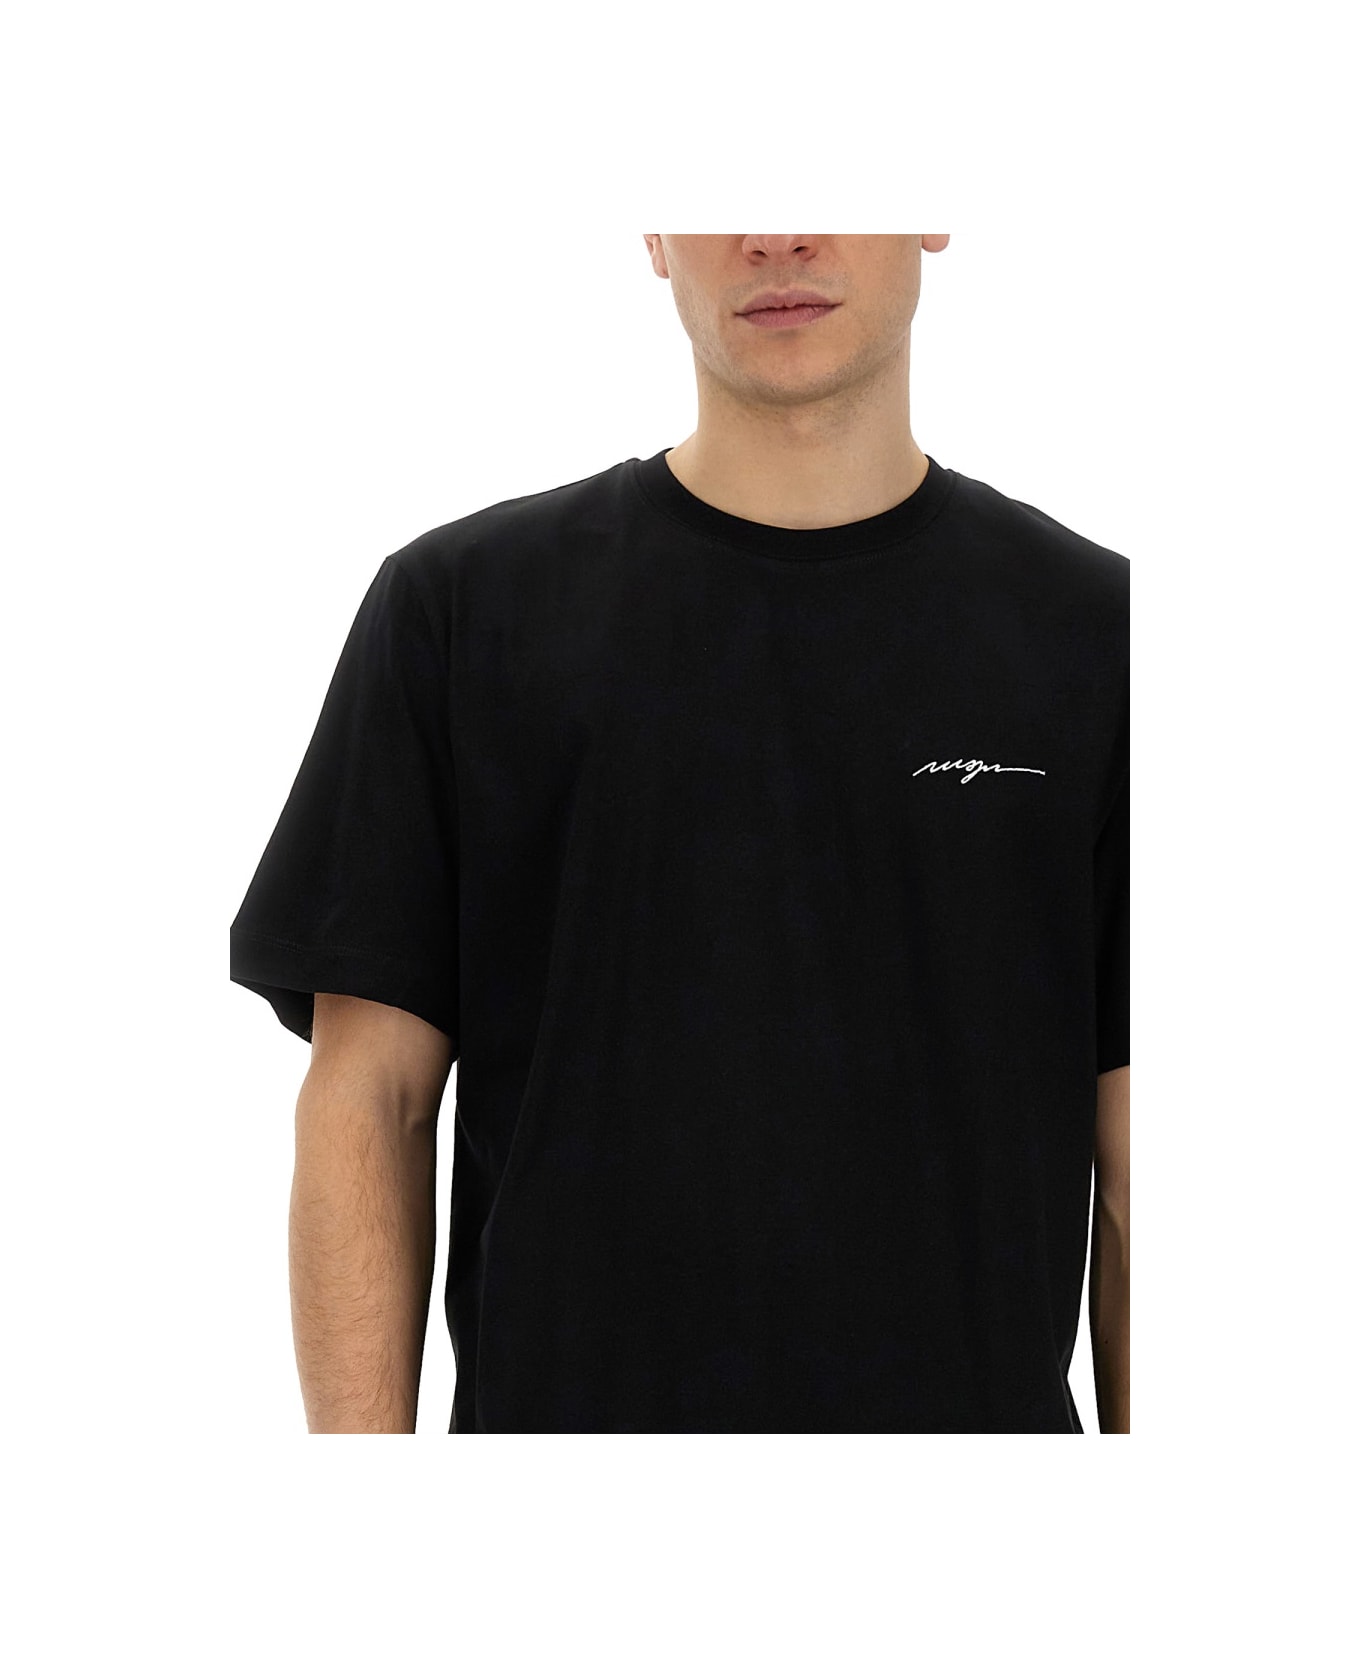 MSGM T-shirt With Logo - BLACK